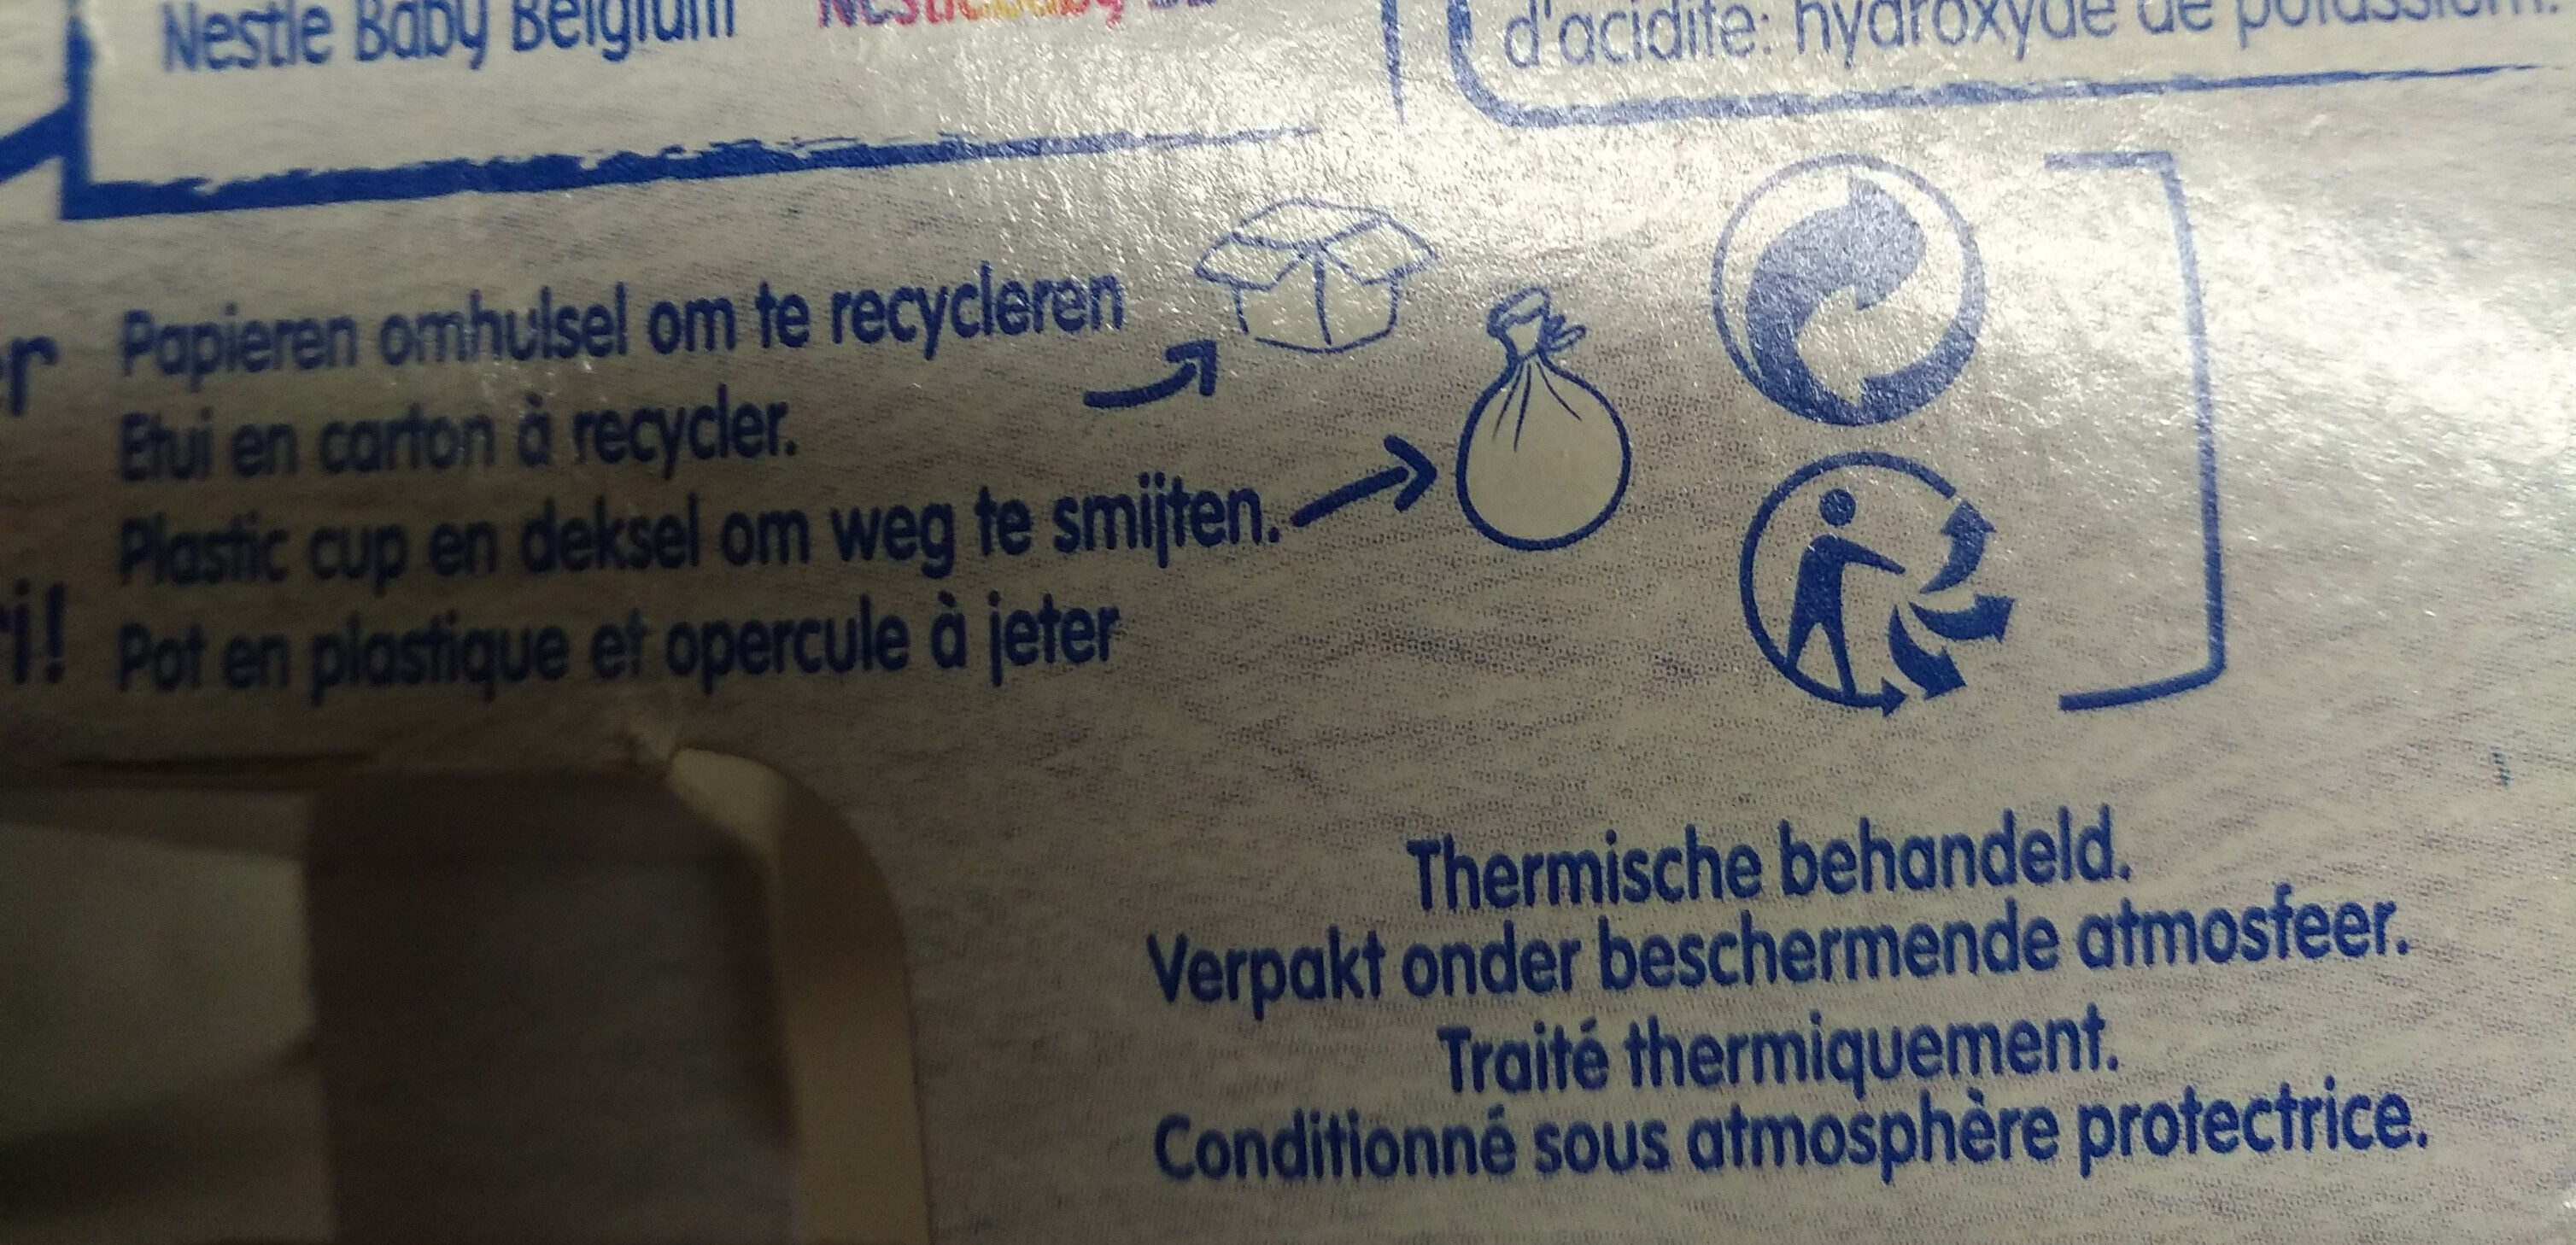 Nestle Baby Milk Dessert Vanilla - Instruction de recyclage et/ou informations d'emballage